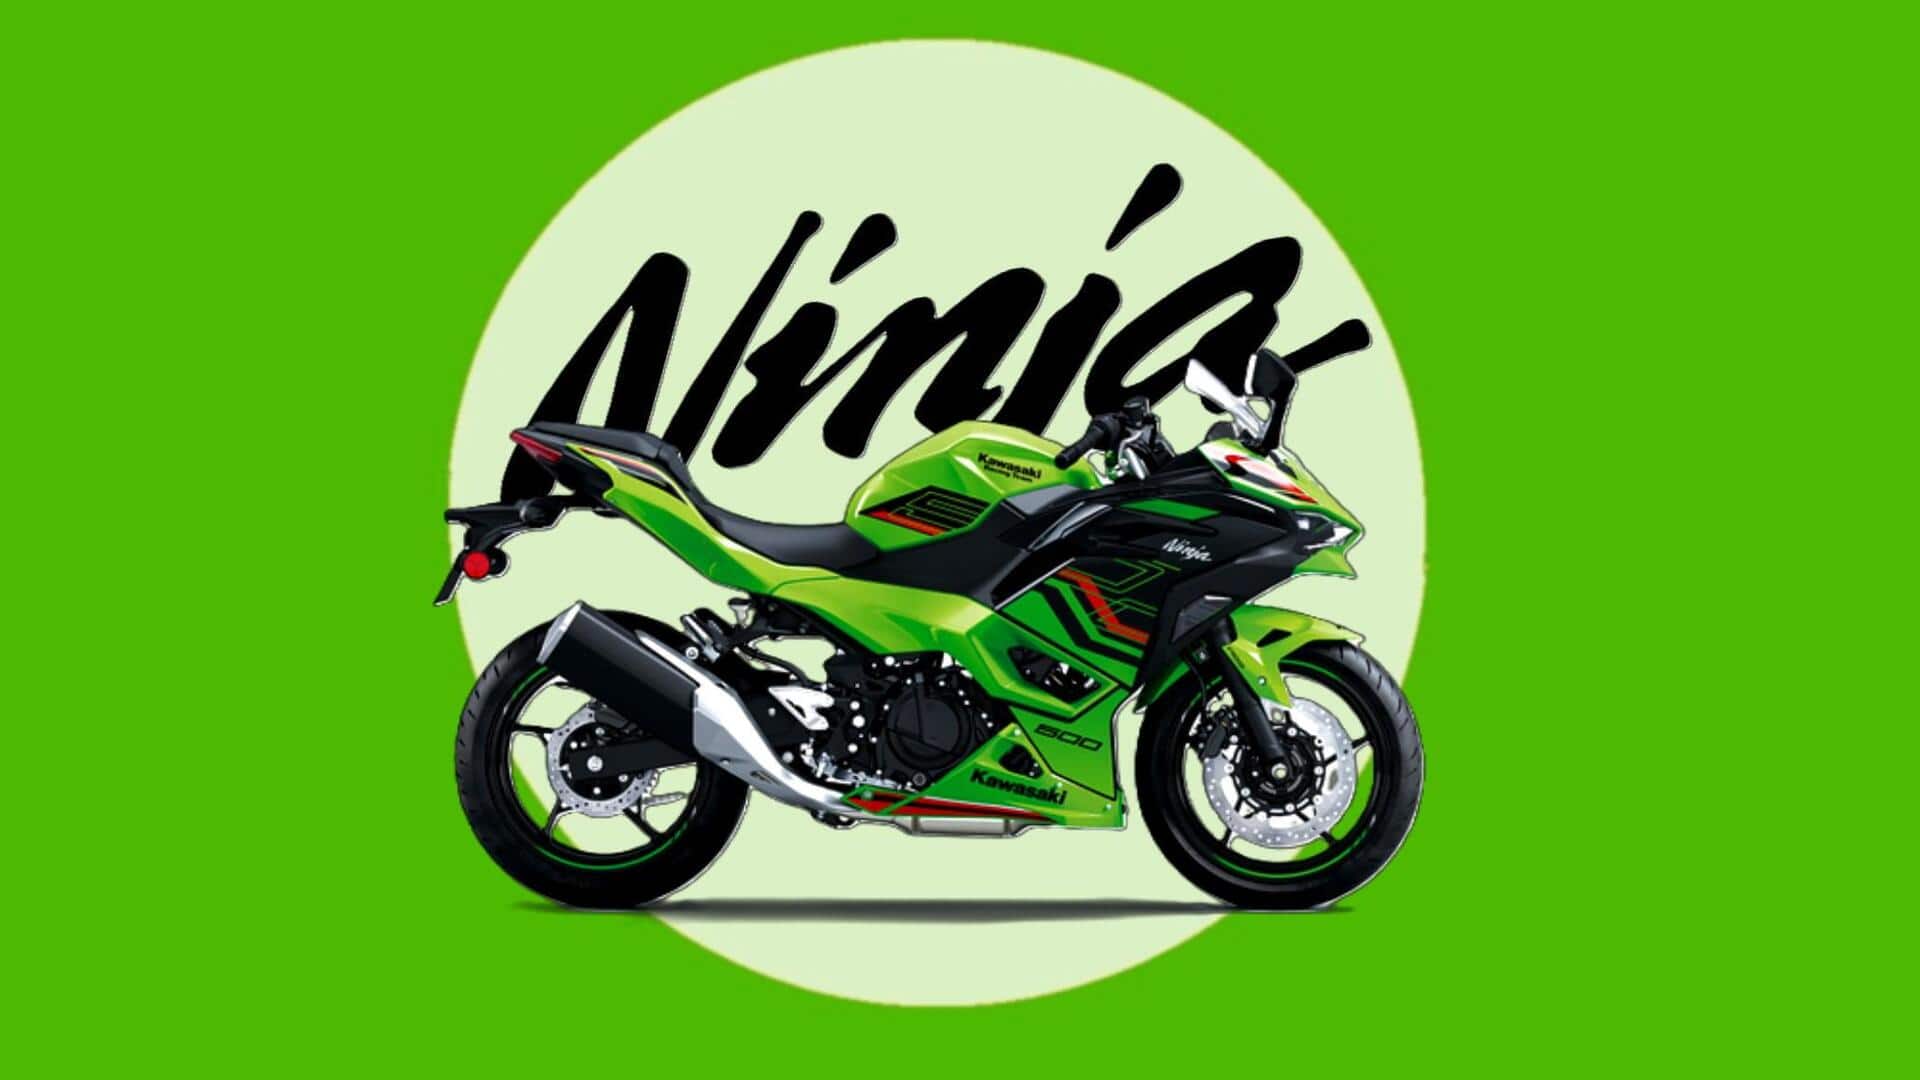 Kawasaki Ninja 500 arriving in India by April: Details here